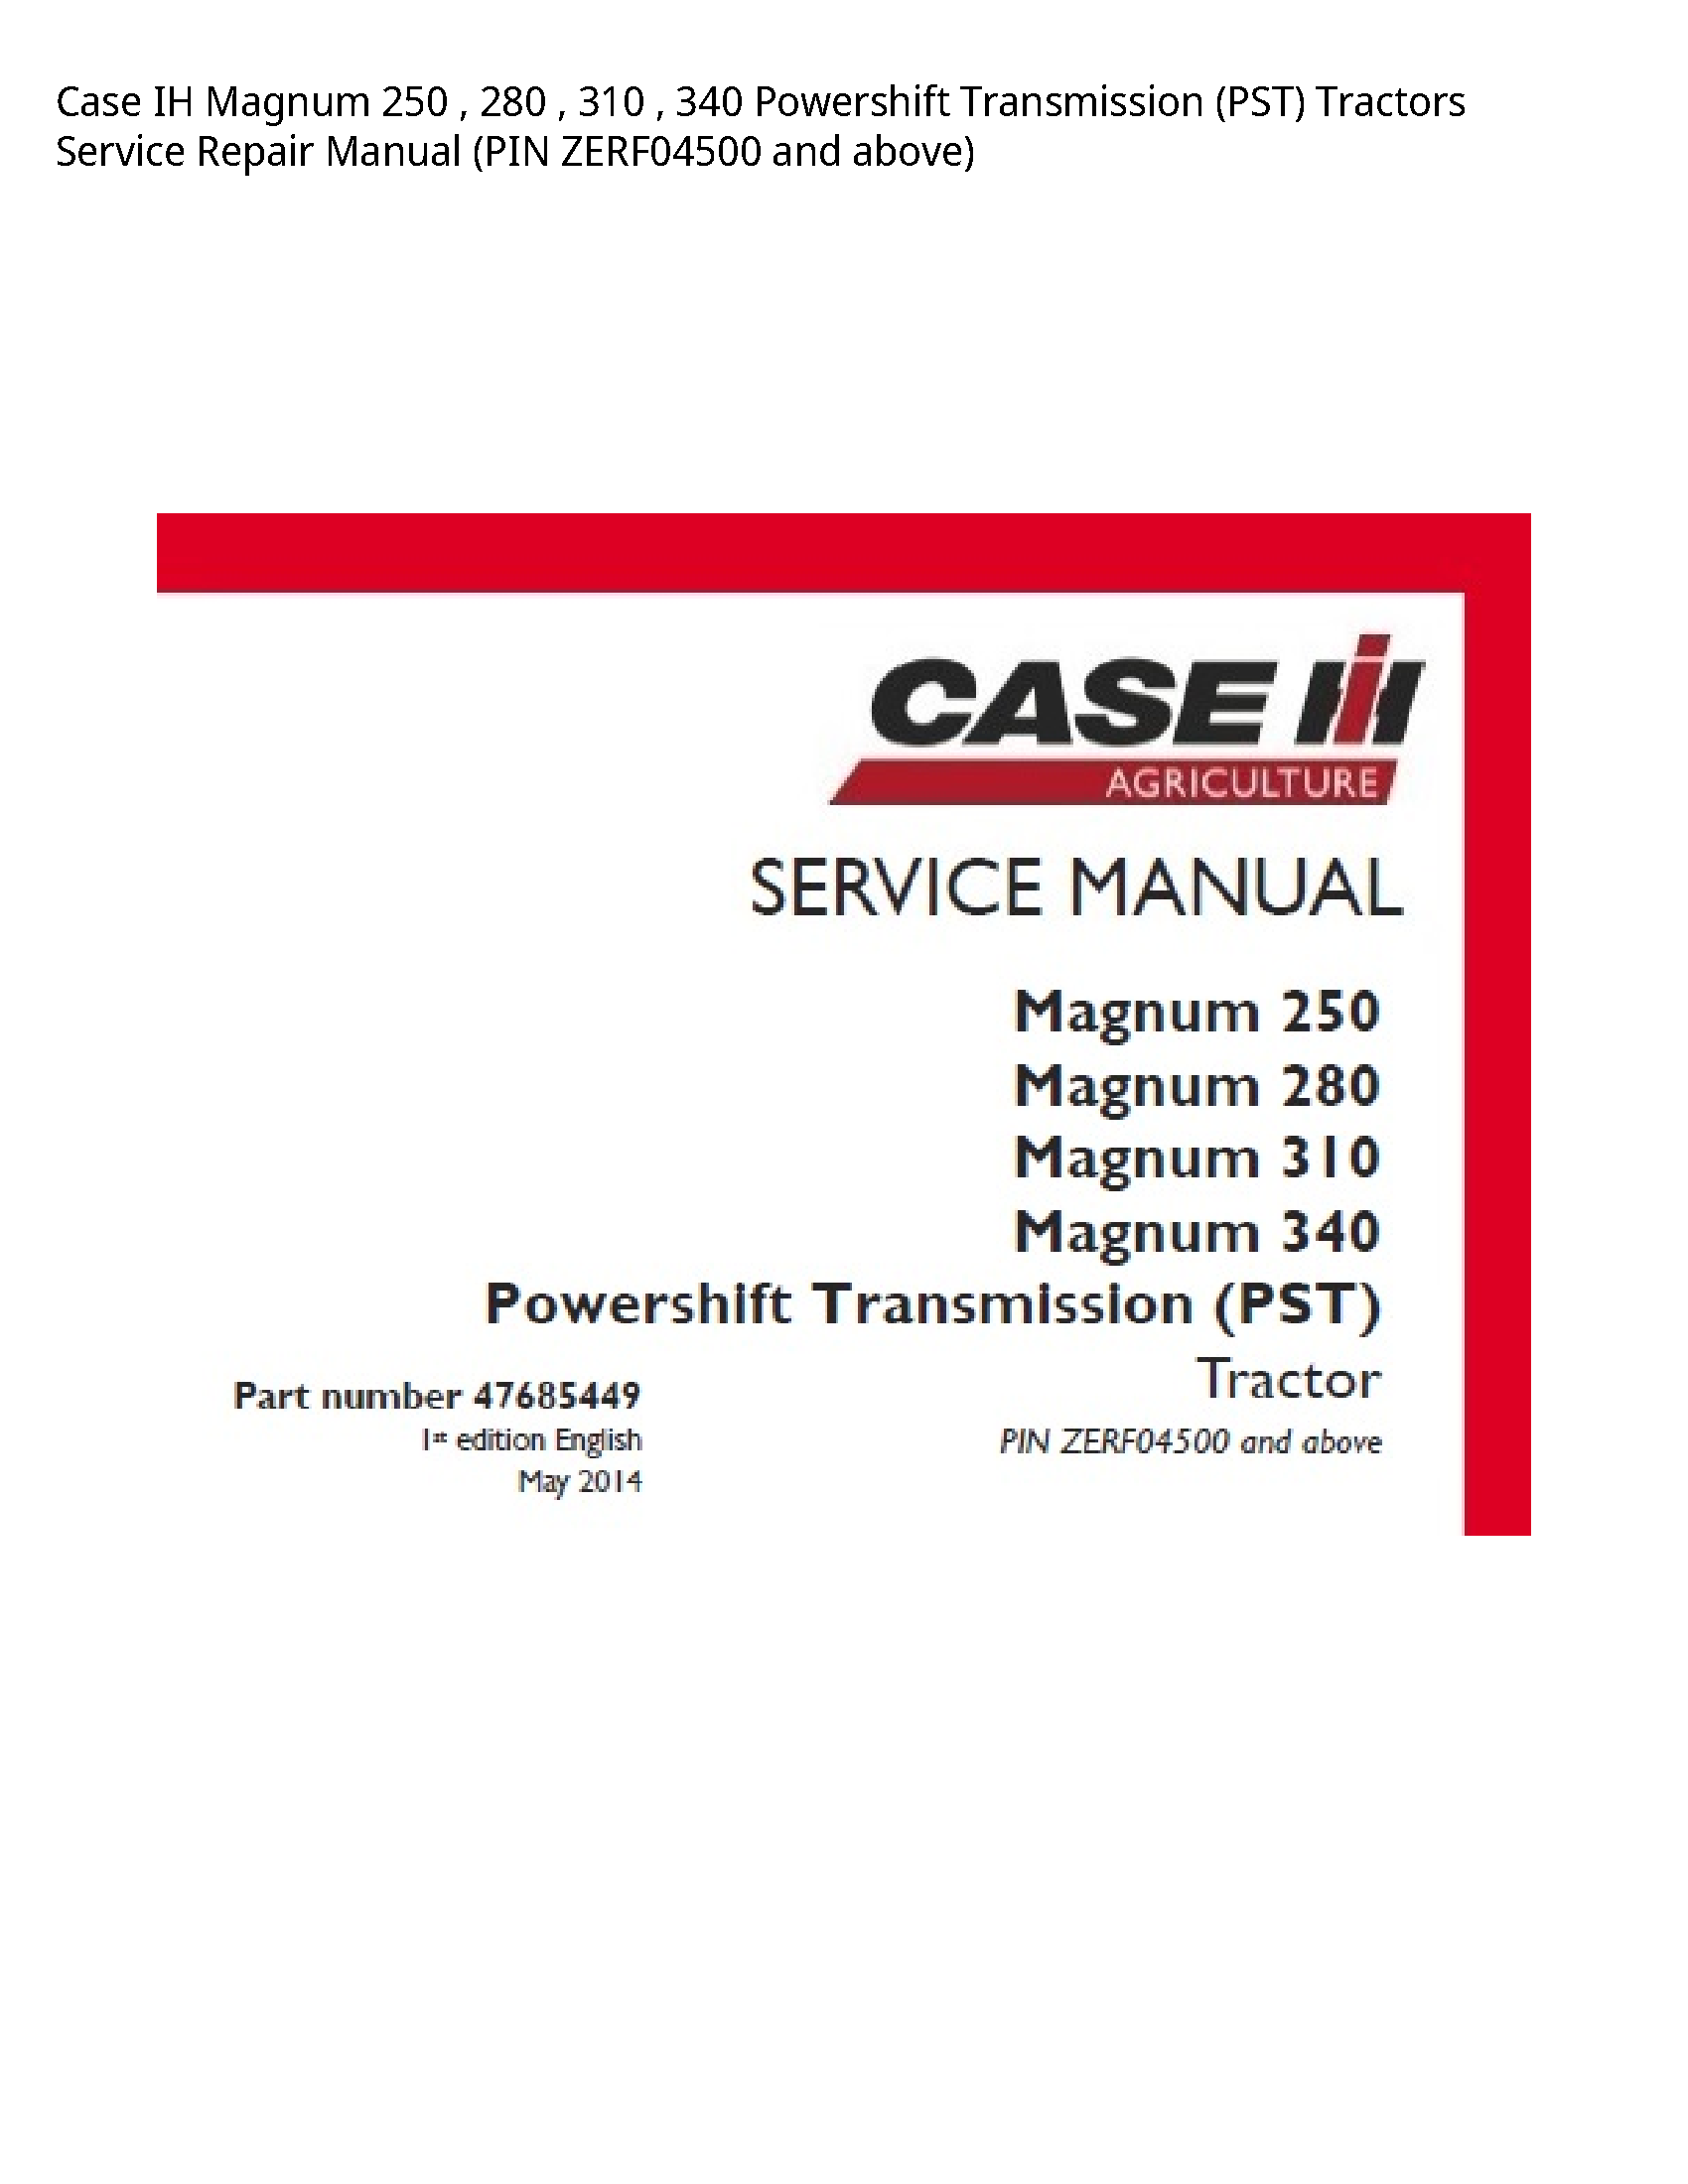 Case/Case IH 250 IH Magnum Powershift Transmission (PST) Tractors manual